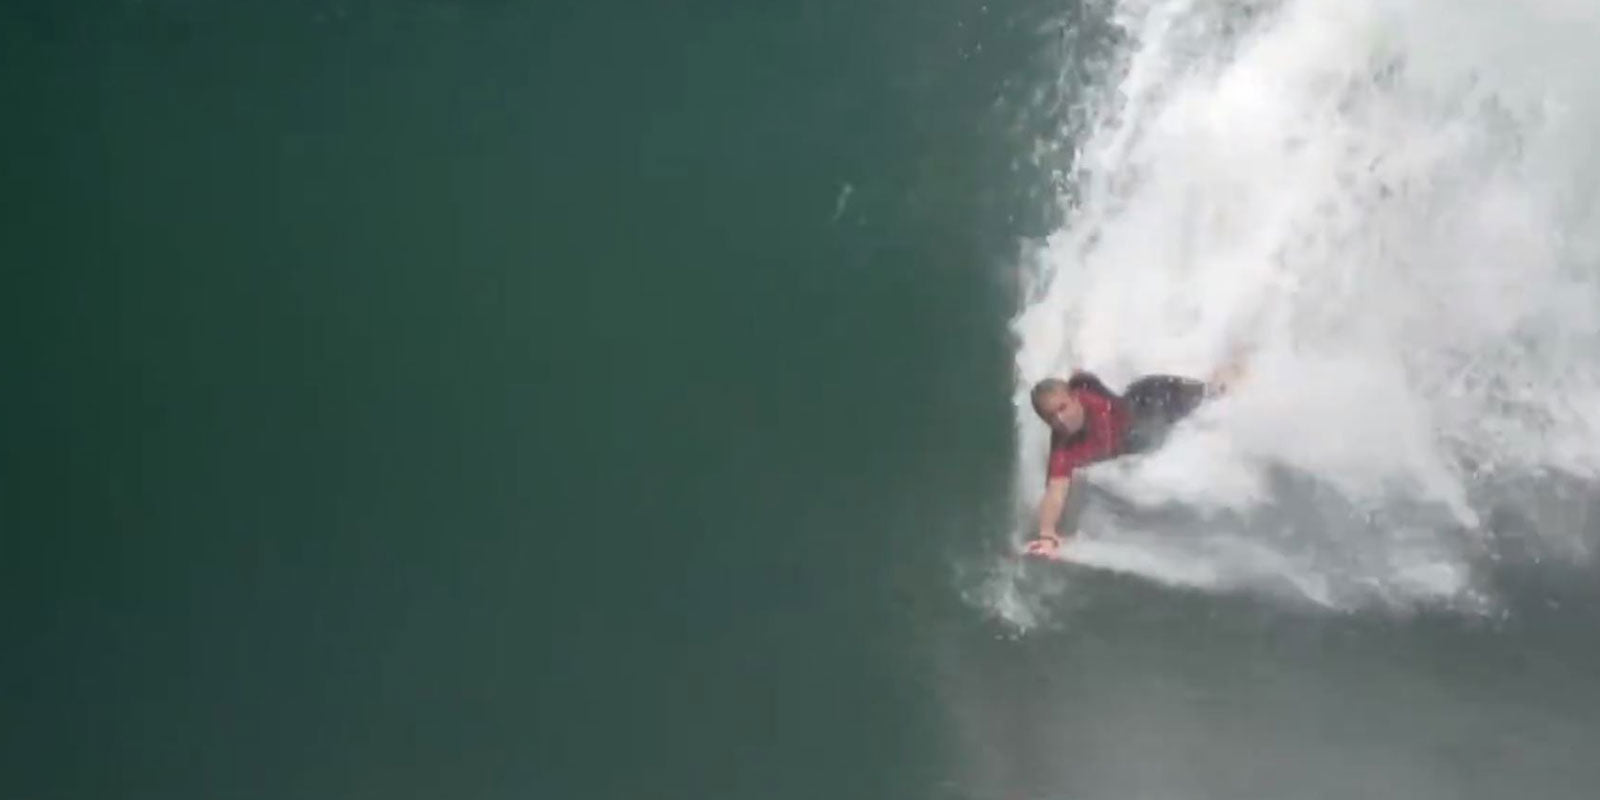 Jamie O'brien Bodysurfing like a Boss | Whoisjob transition from surfboard to handboard